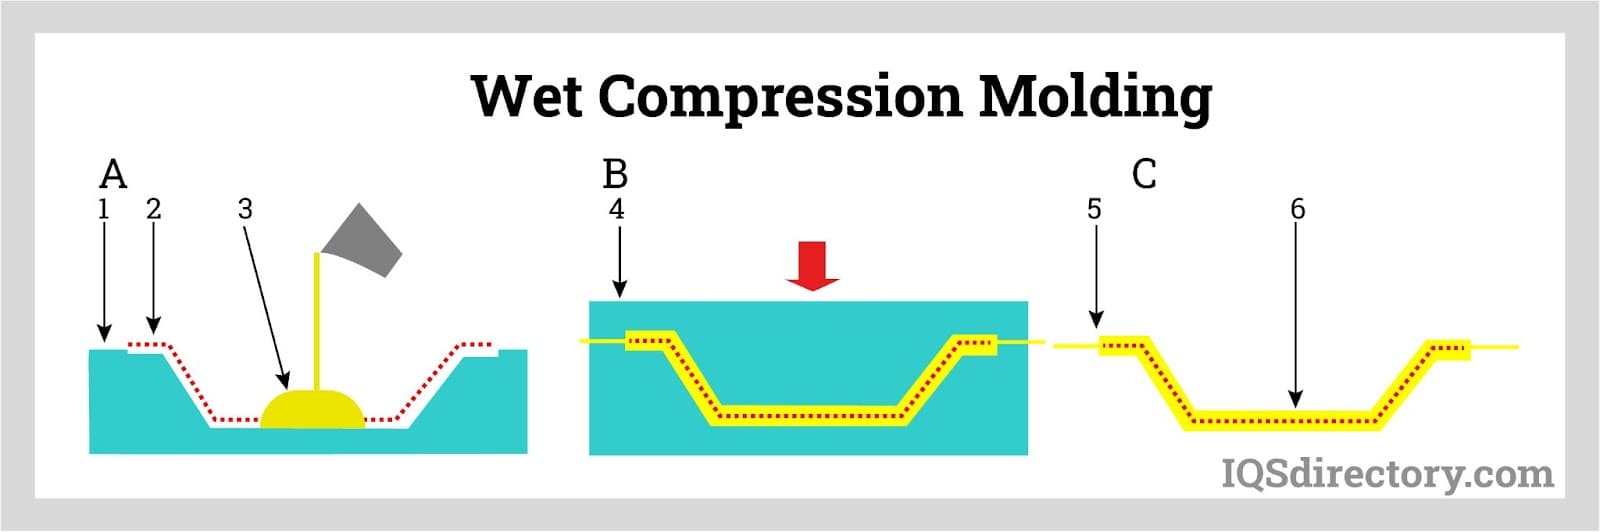 Wet Compression Molding